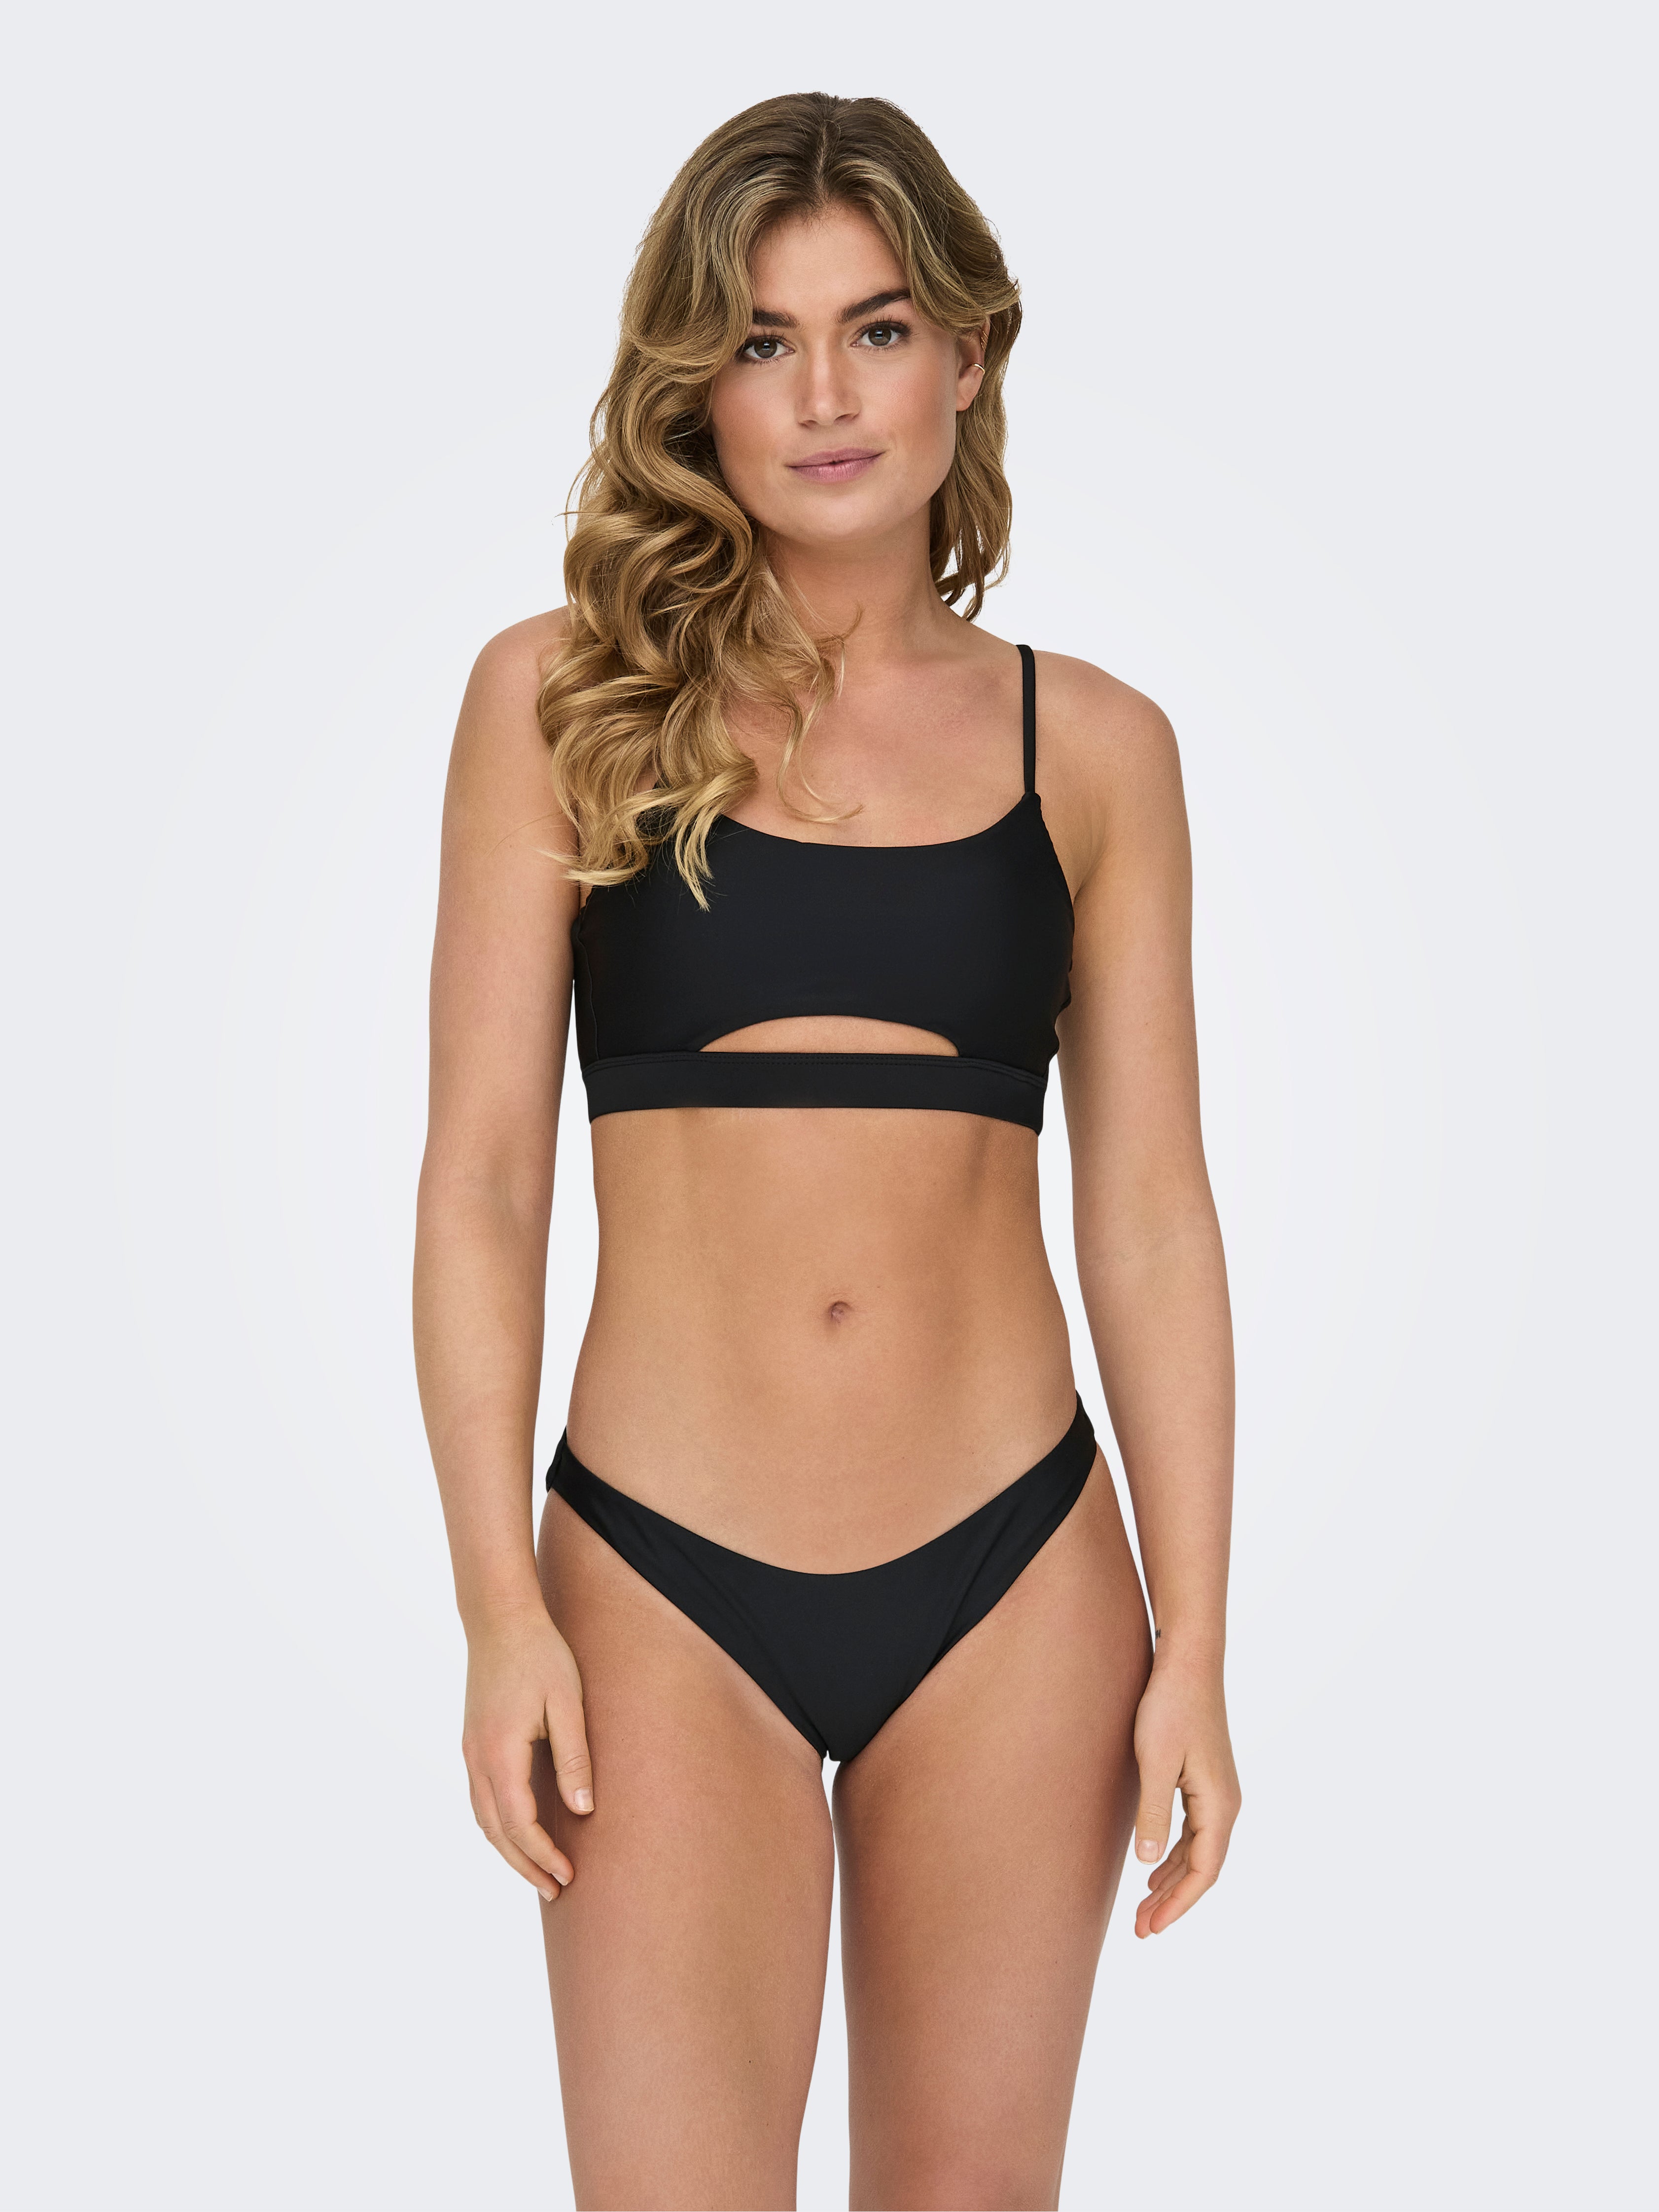 Bikini top with adjustable shoulder straps